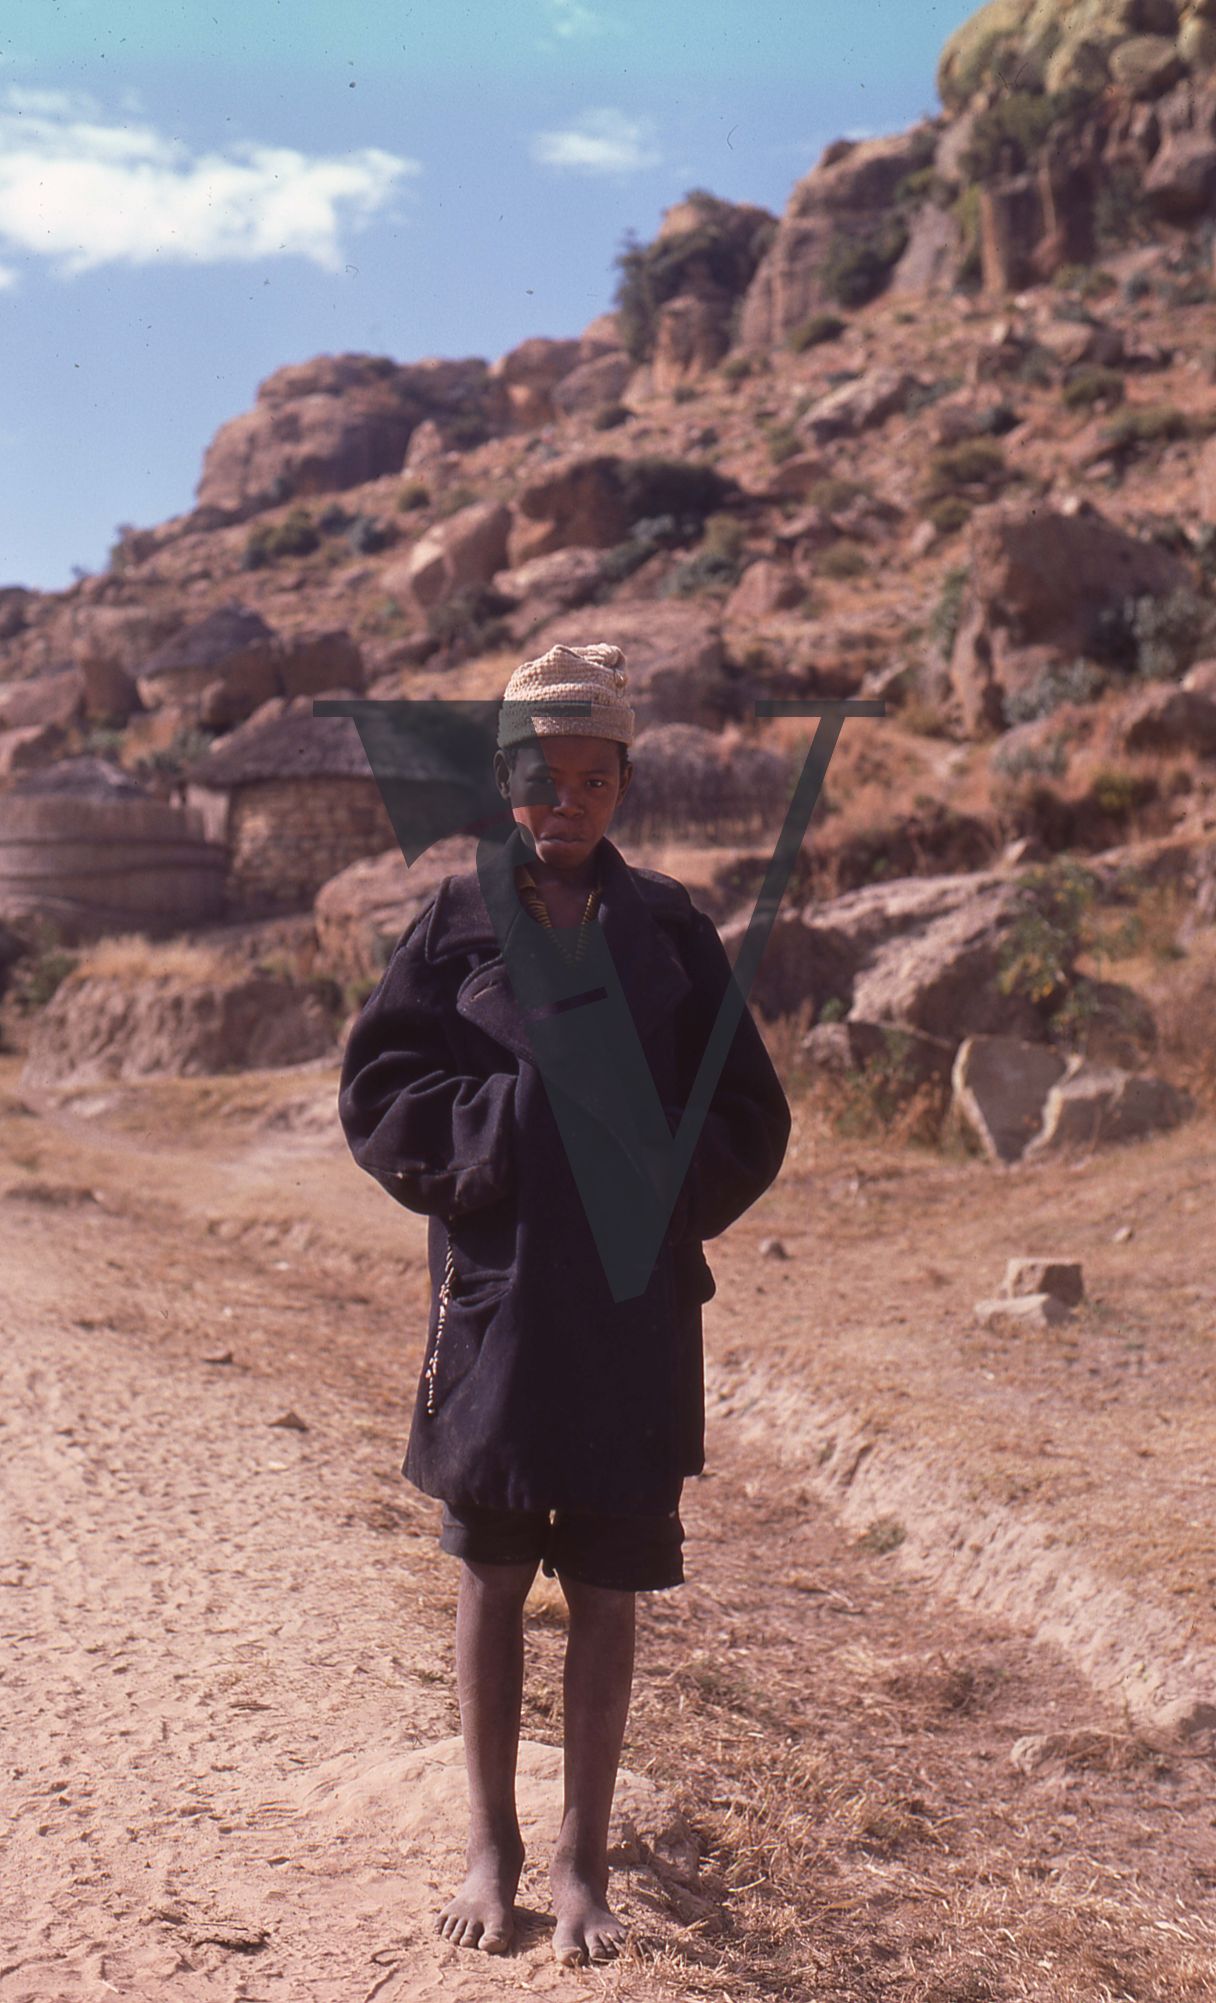 Lesotho, Handspun mohair farming community, boy in black coat and hat, portrait.